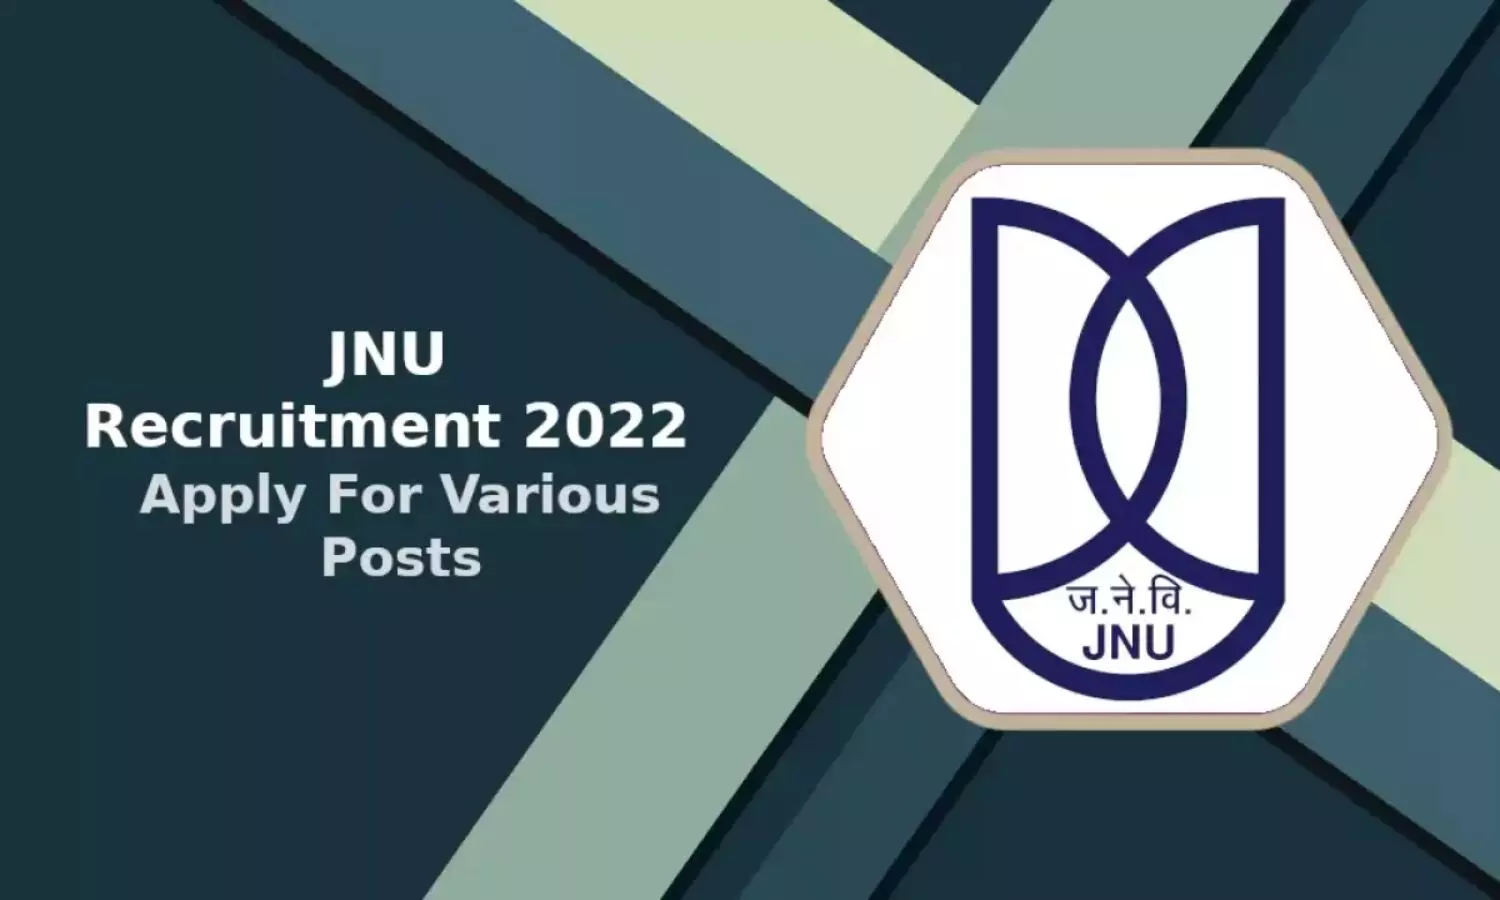 jnu recruitment 2022 know vacancy detail education qualification agel limit selection process